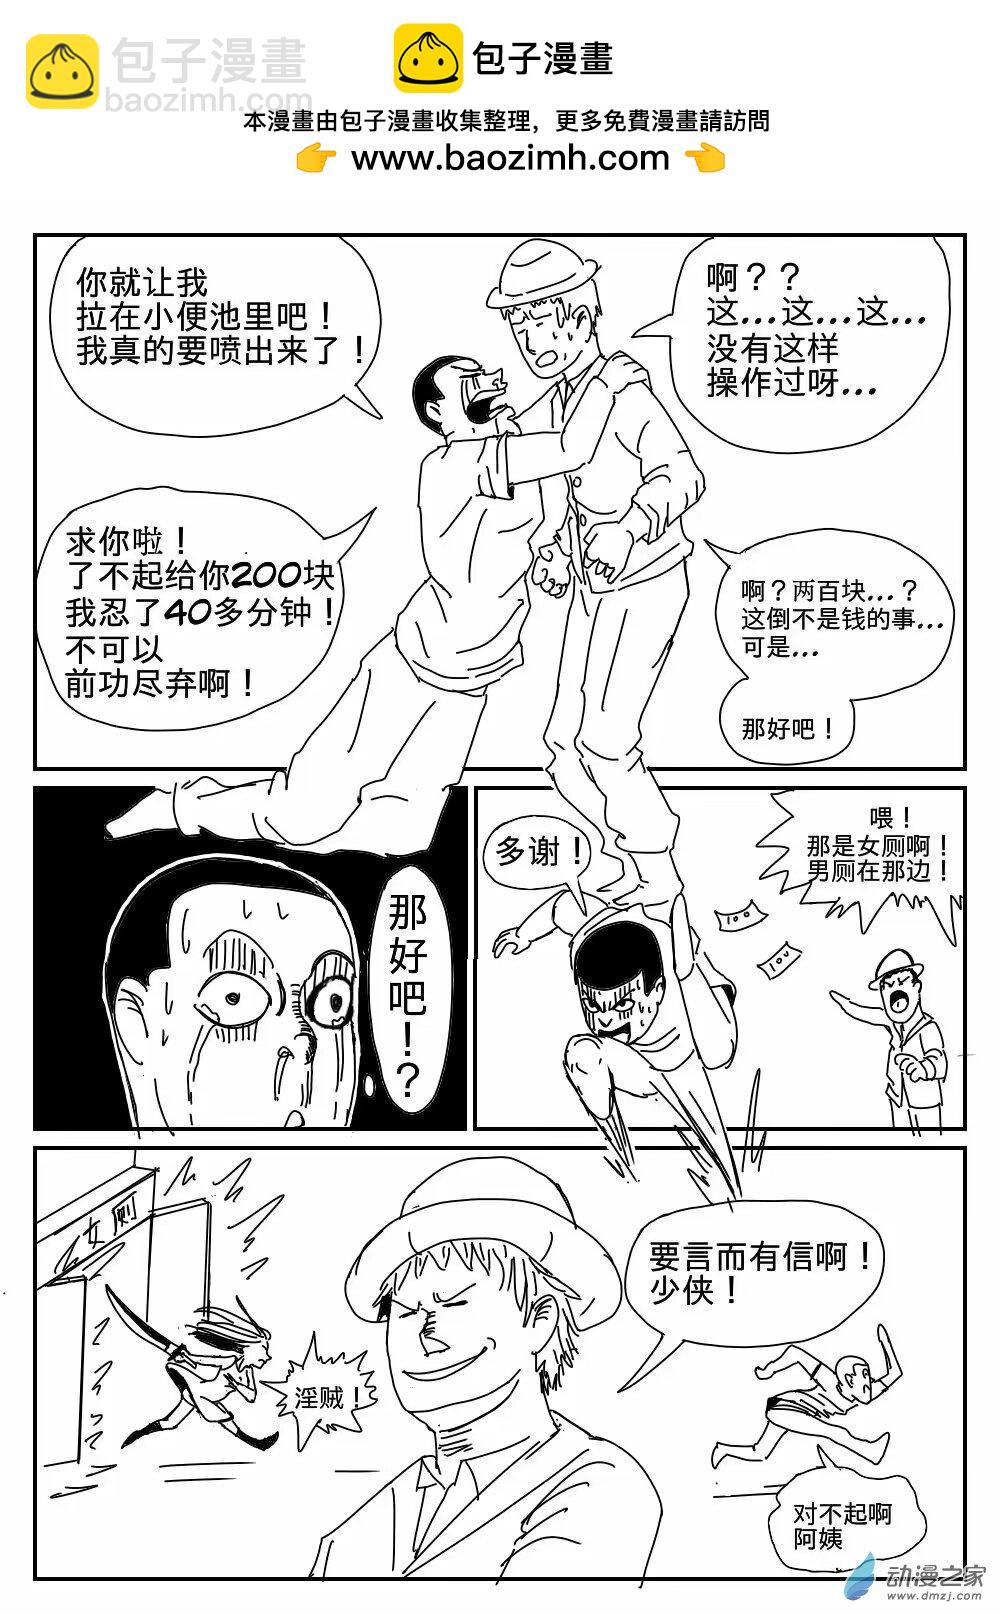 K神的短篇漫畫集 - 03 公廁 - 2